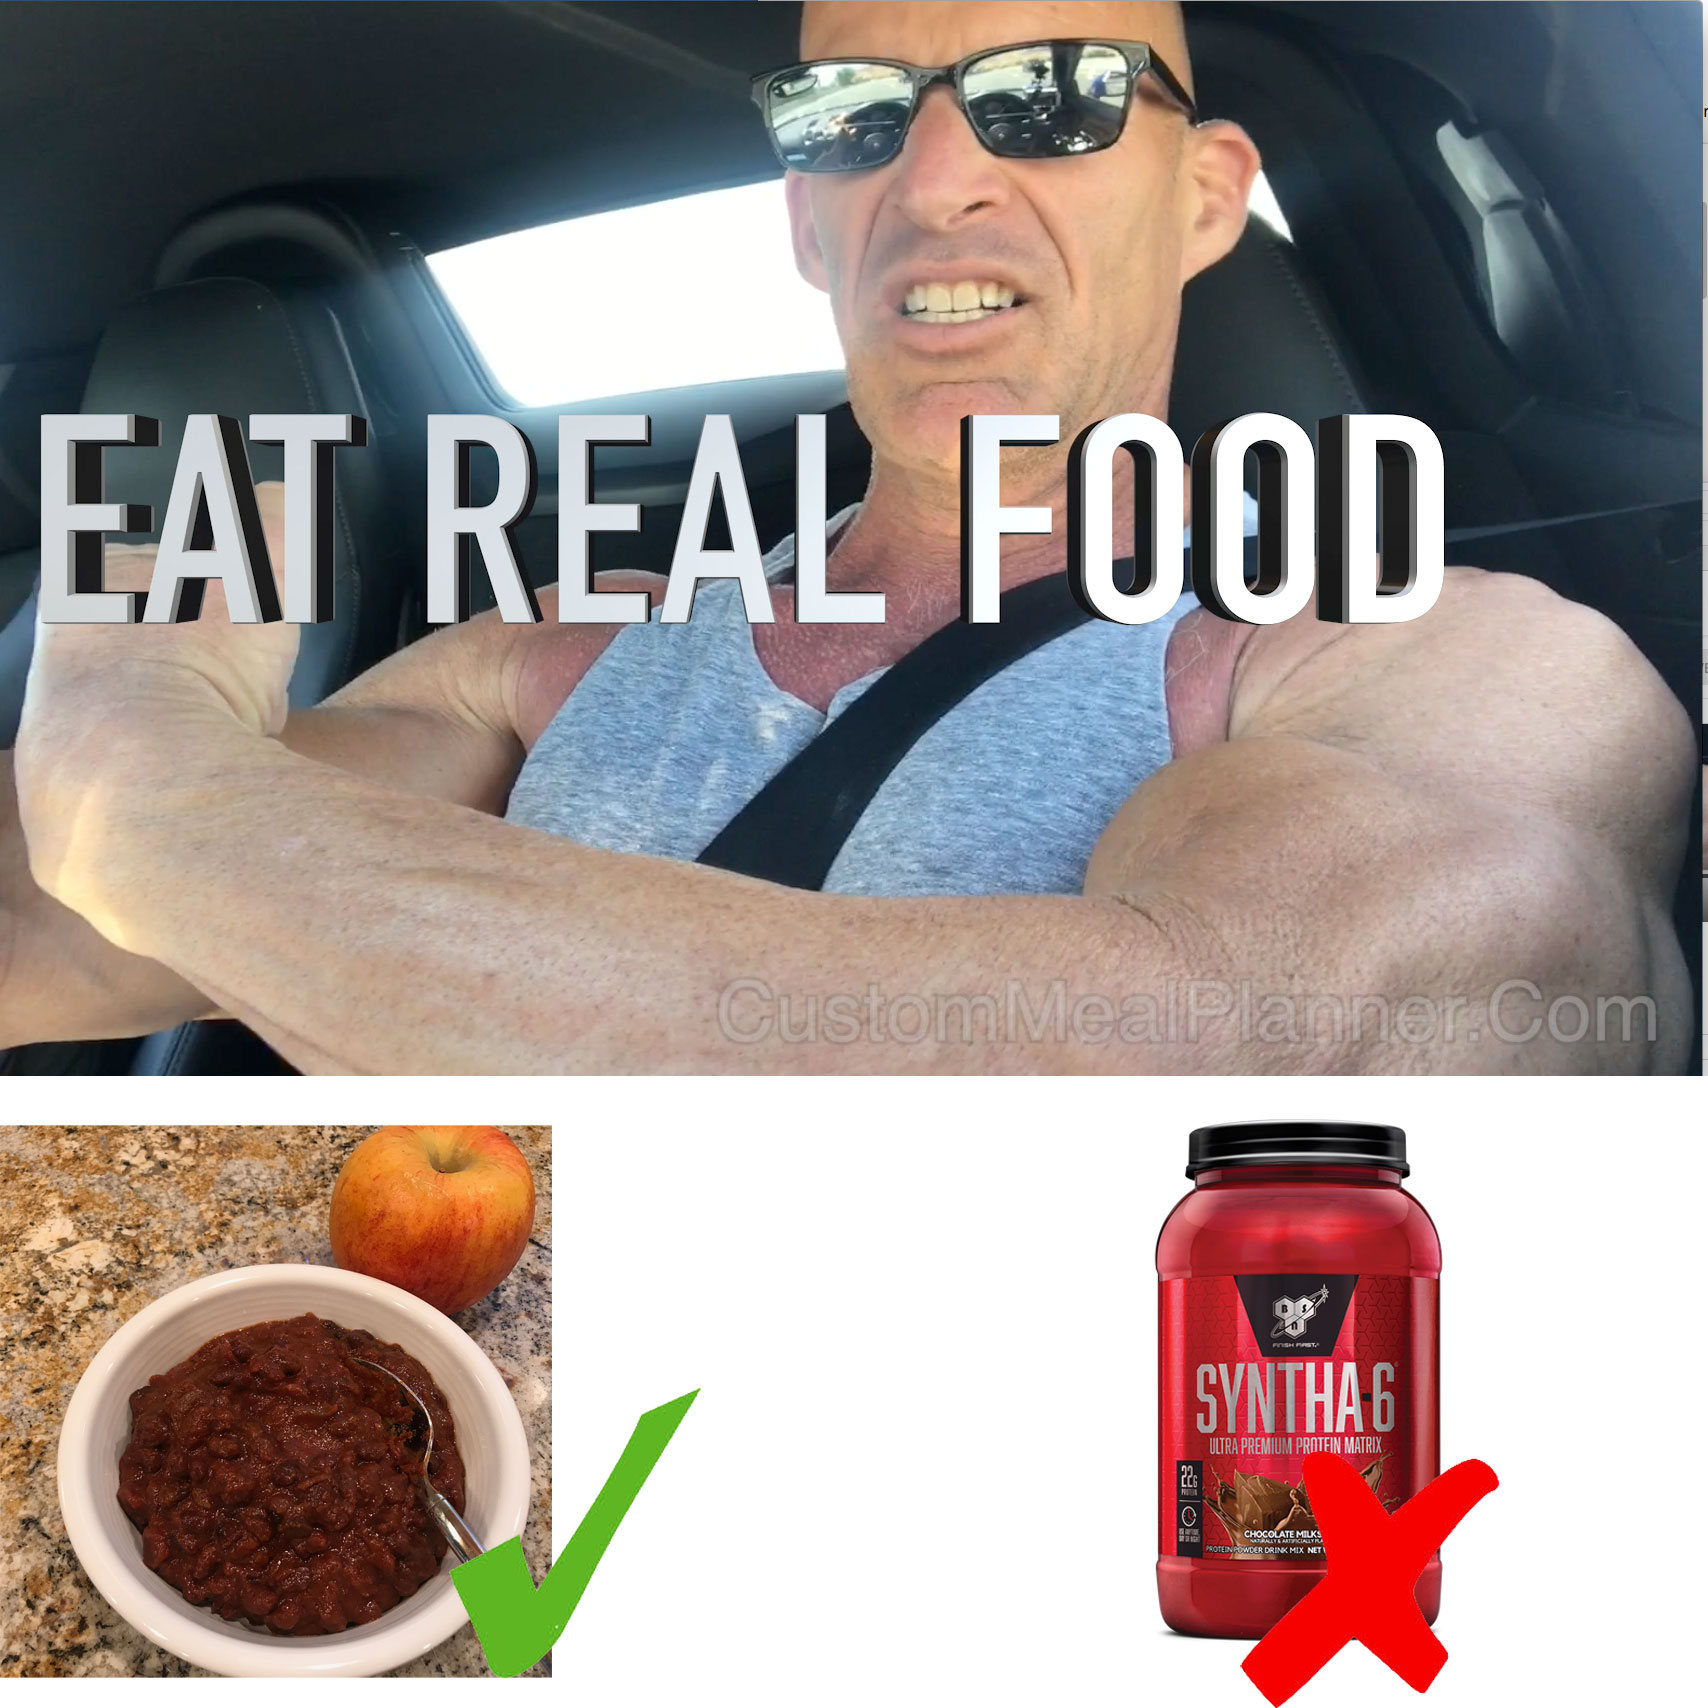 EAT REAL FOOD